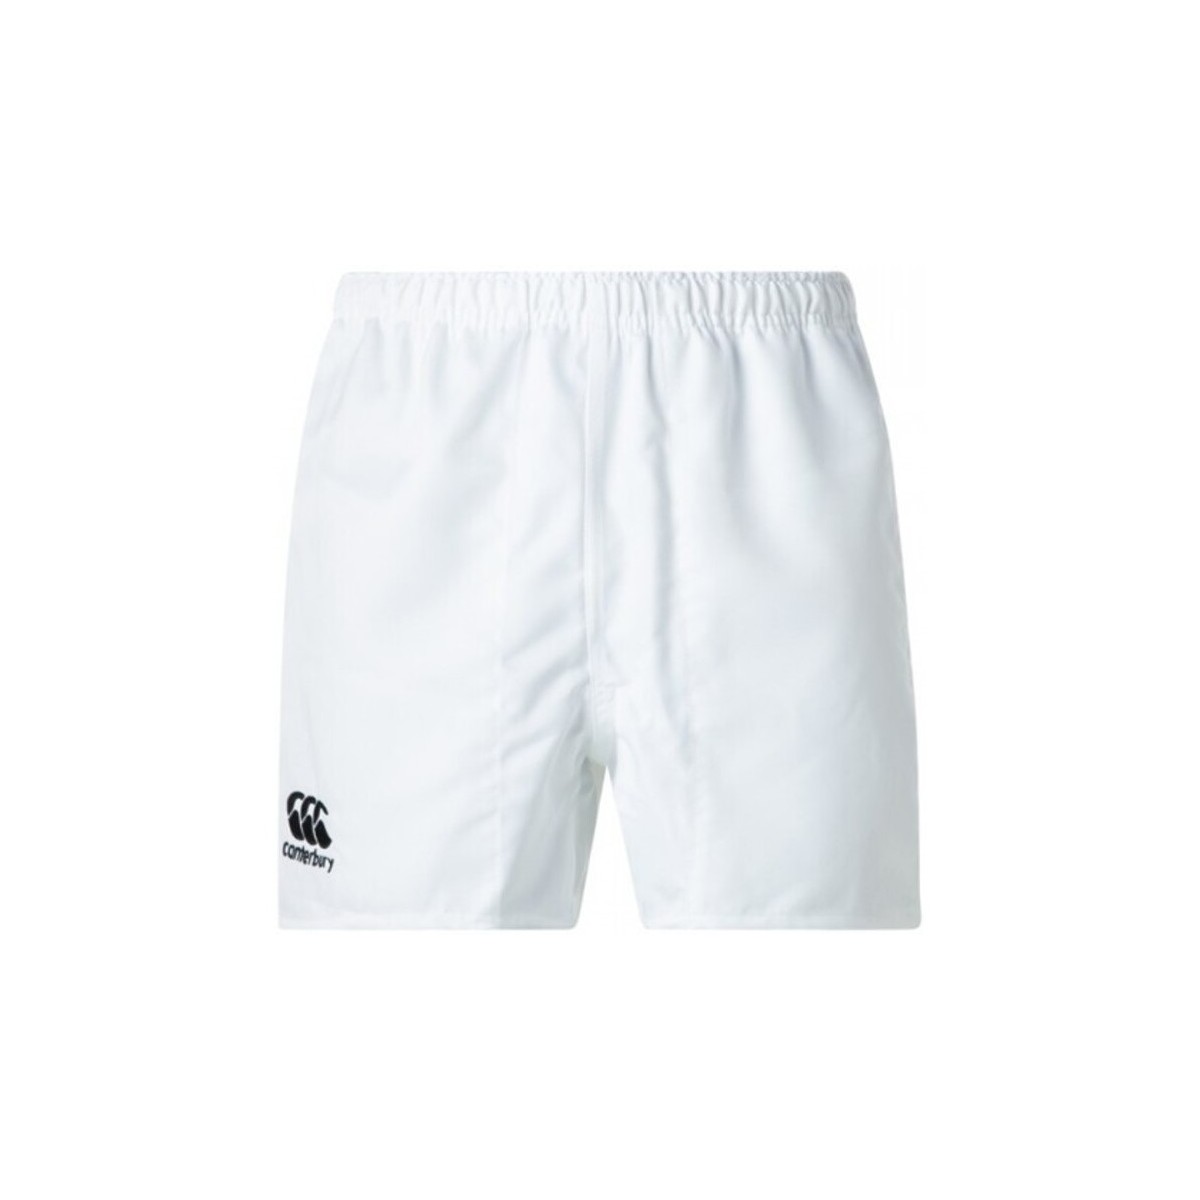 Vêtements Enfant Shorts / Bermudas Canterbury Professional Blanc